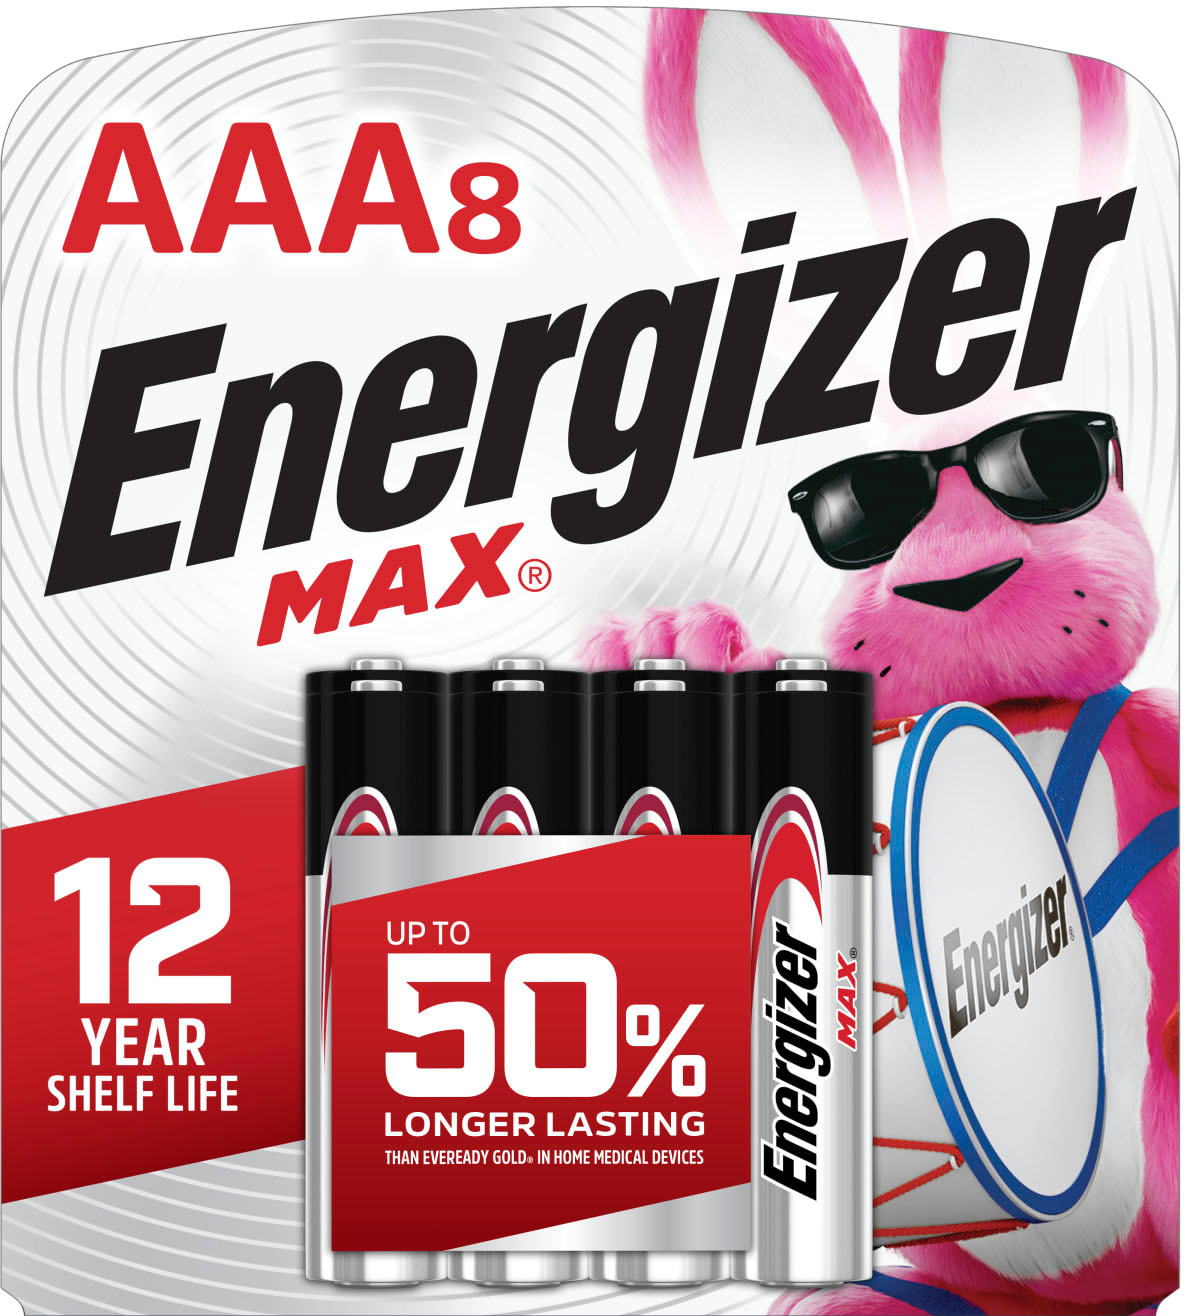 Energizer Pile Au Lithium Aaa 1.5 V Ultimate 4-blister à Prix